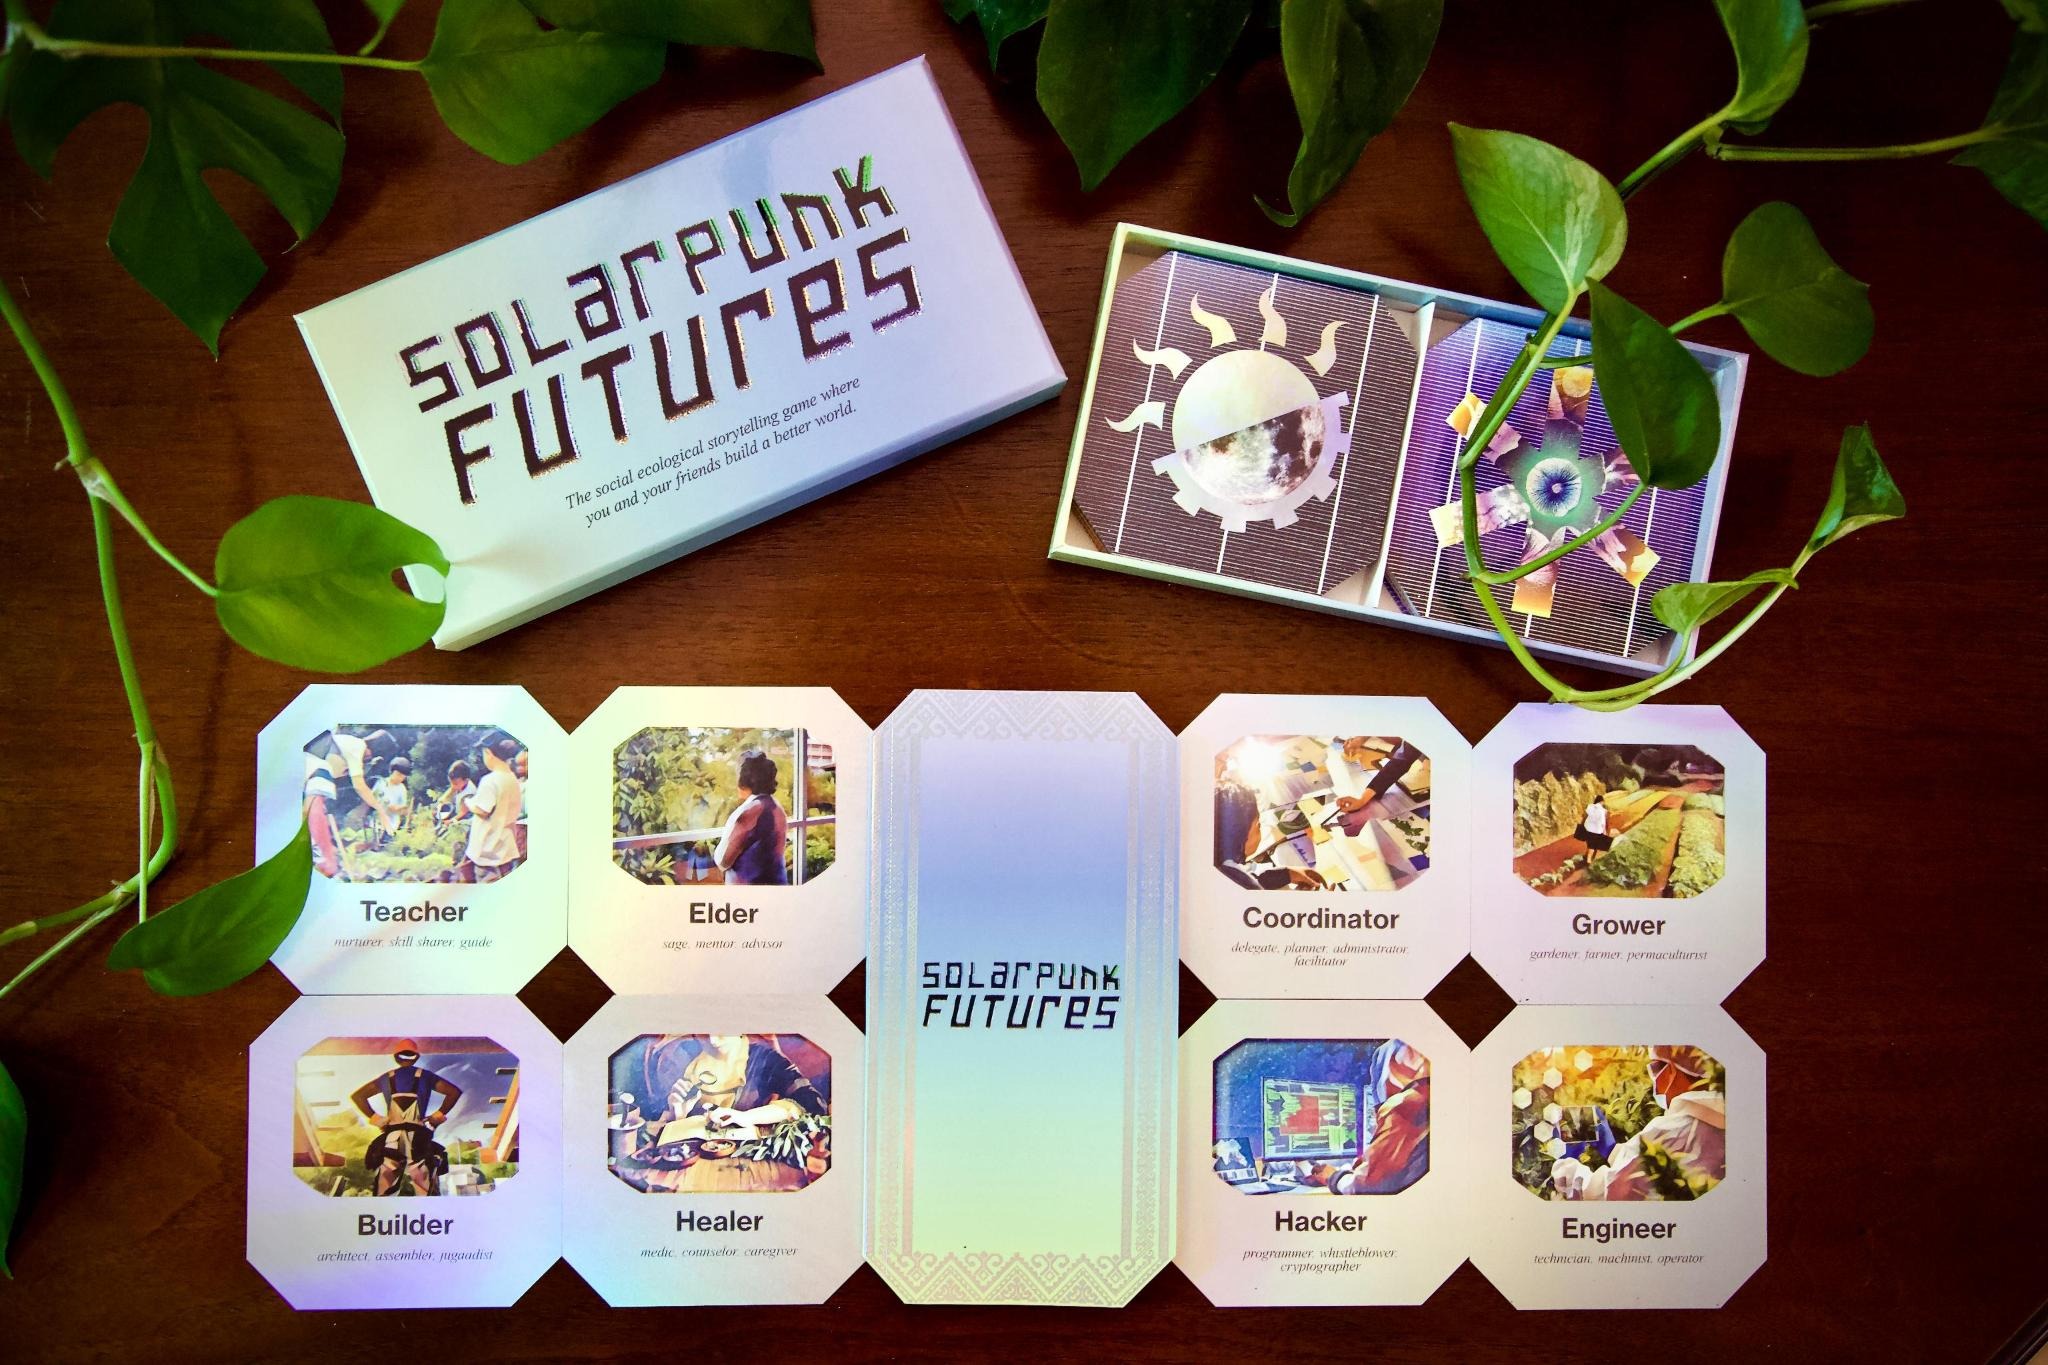 Solarpunk Futures by nikAleksandr